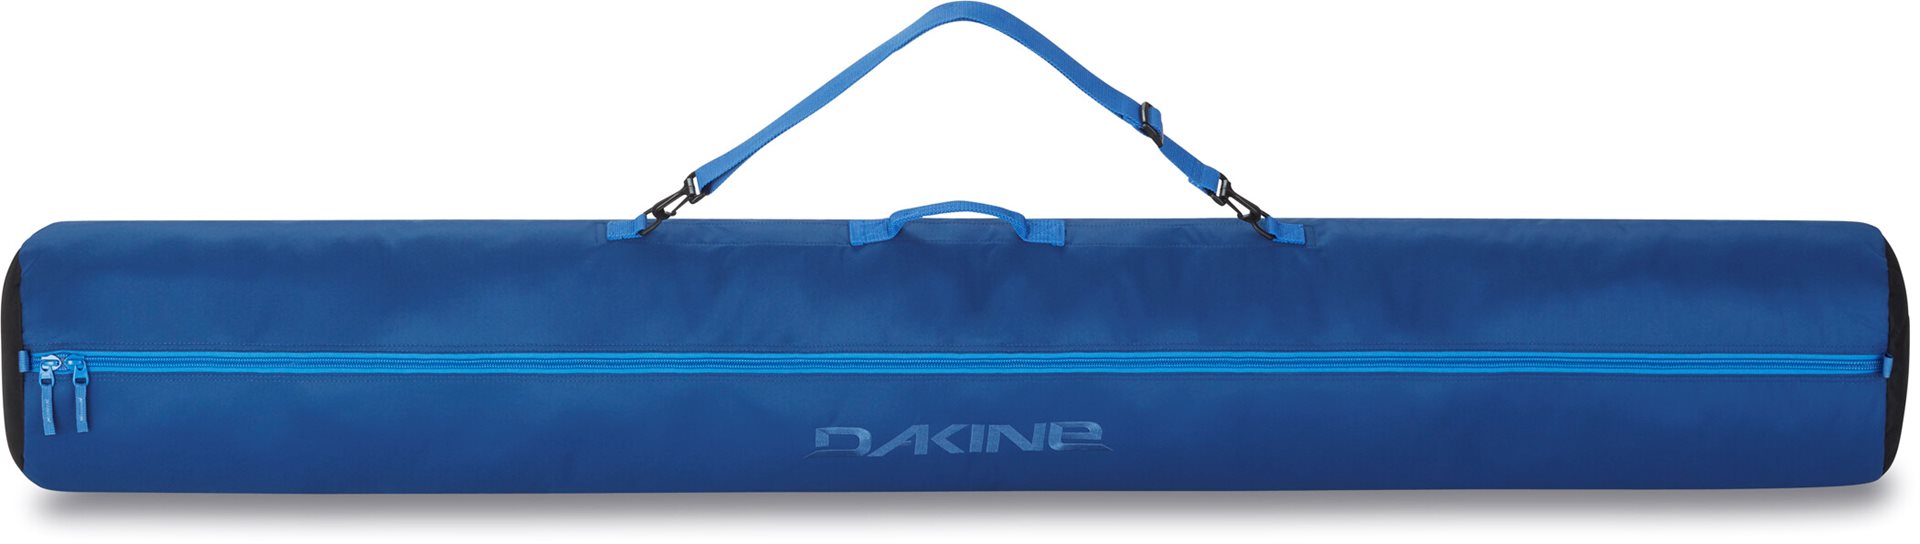 Dakine Ski Sleeve  - Deep Blue - 175 cm Skitas - Reisartikelen-nl